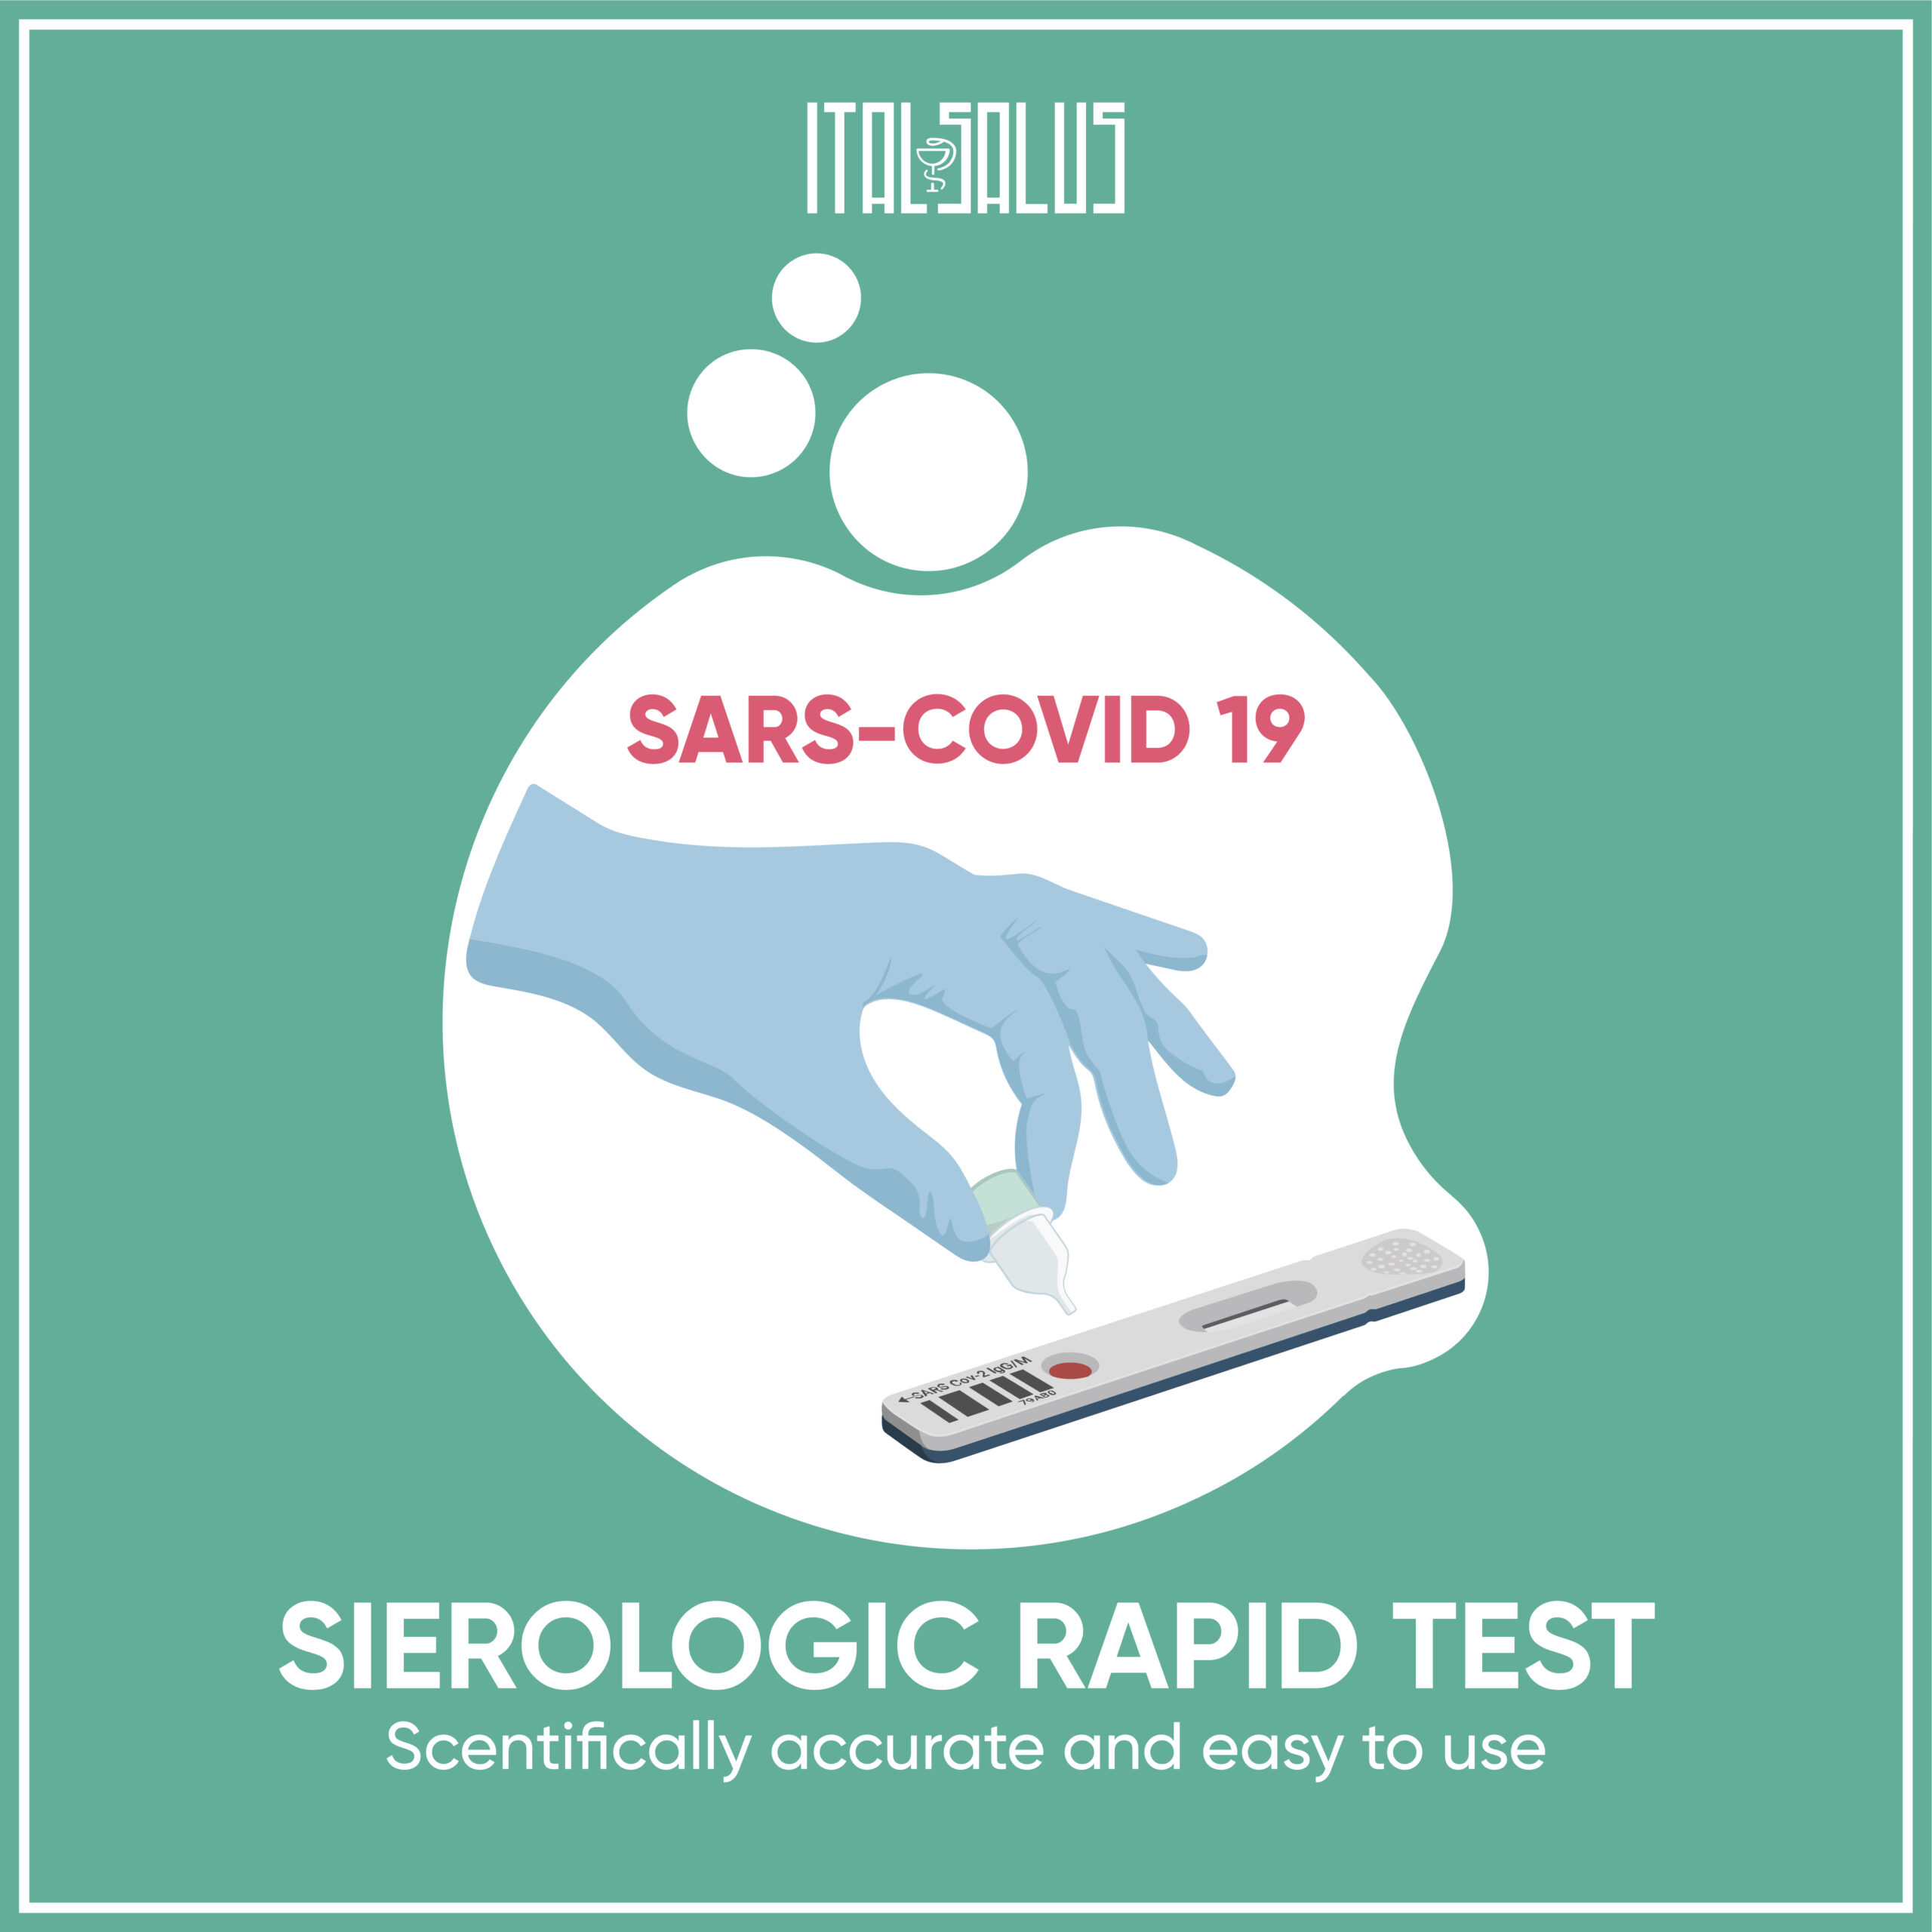 sireologic rapid test draw